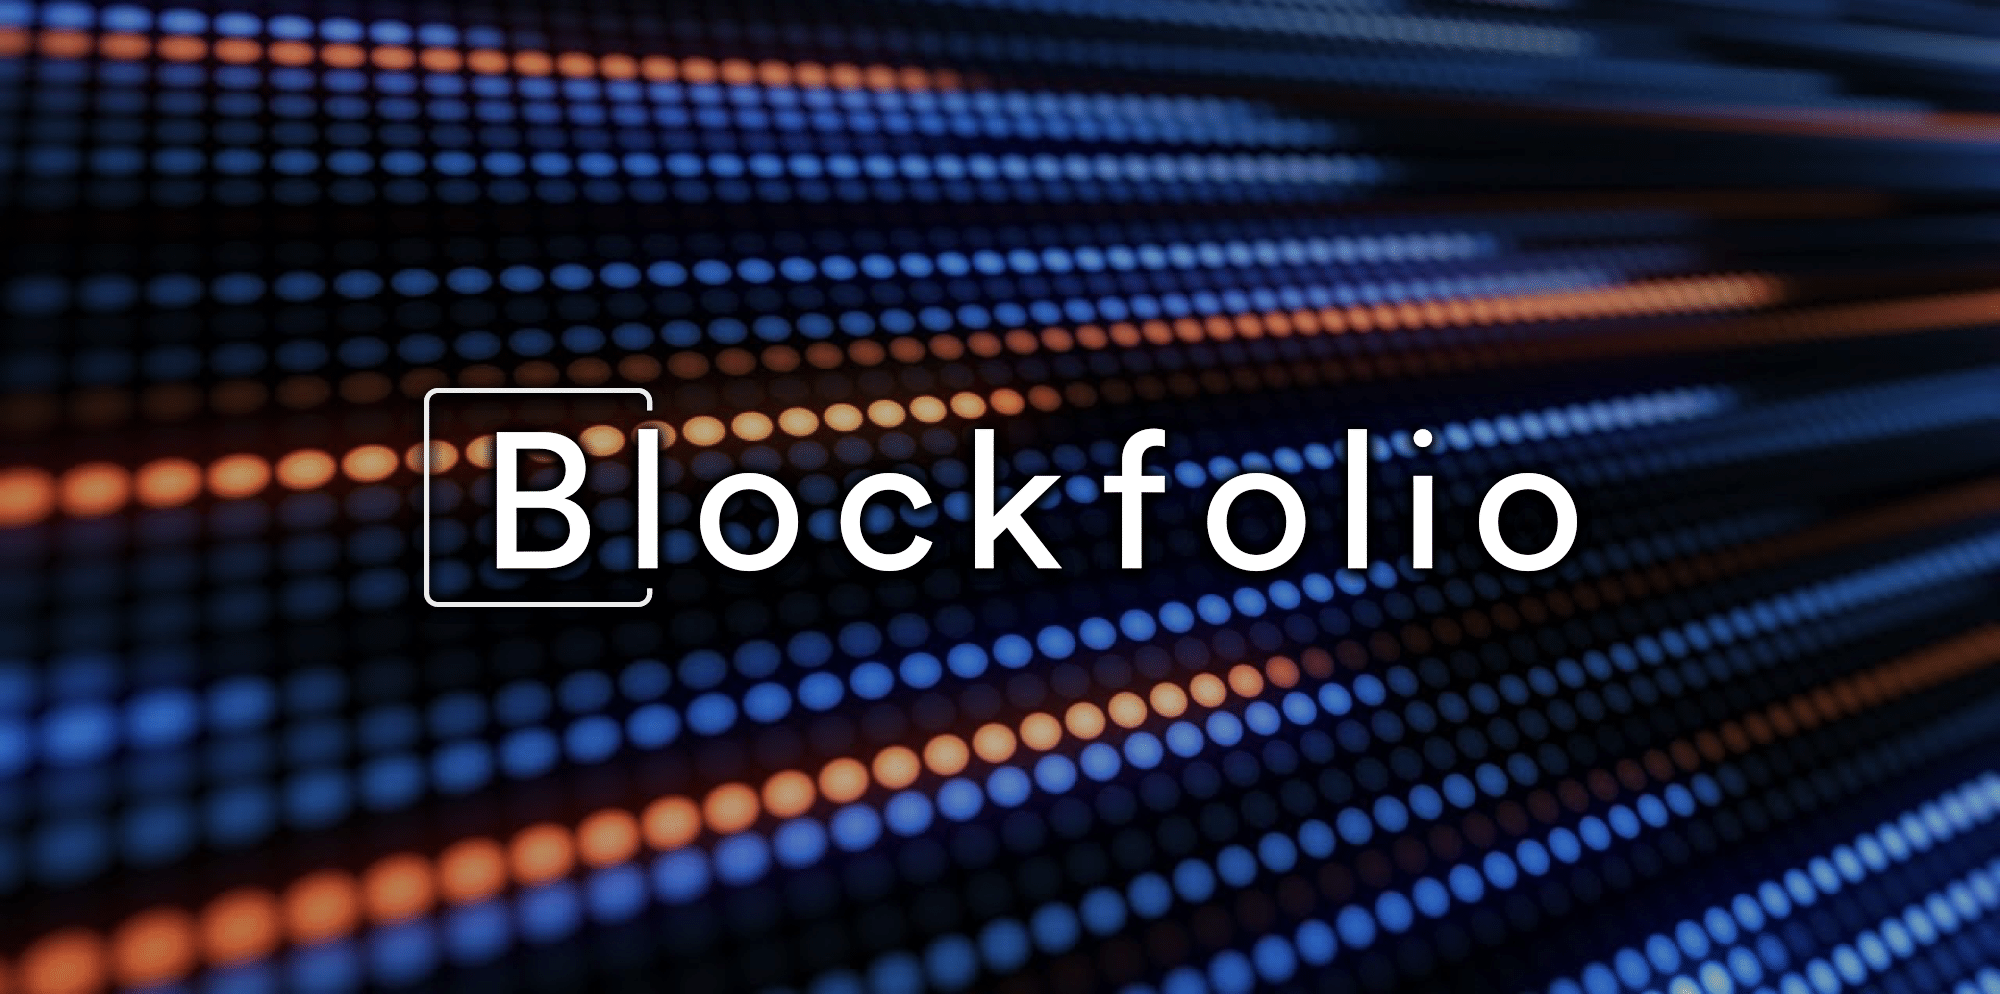 blockfolio cryptocurrencies